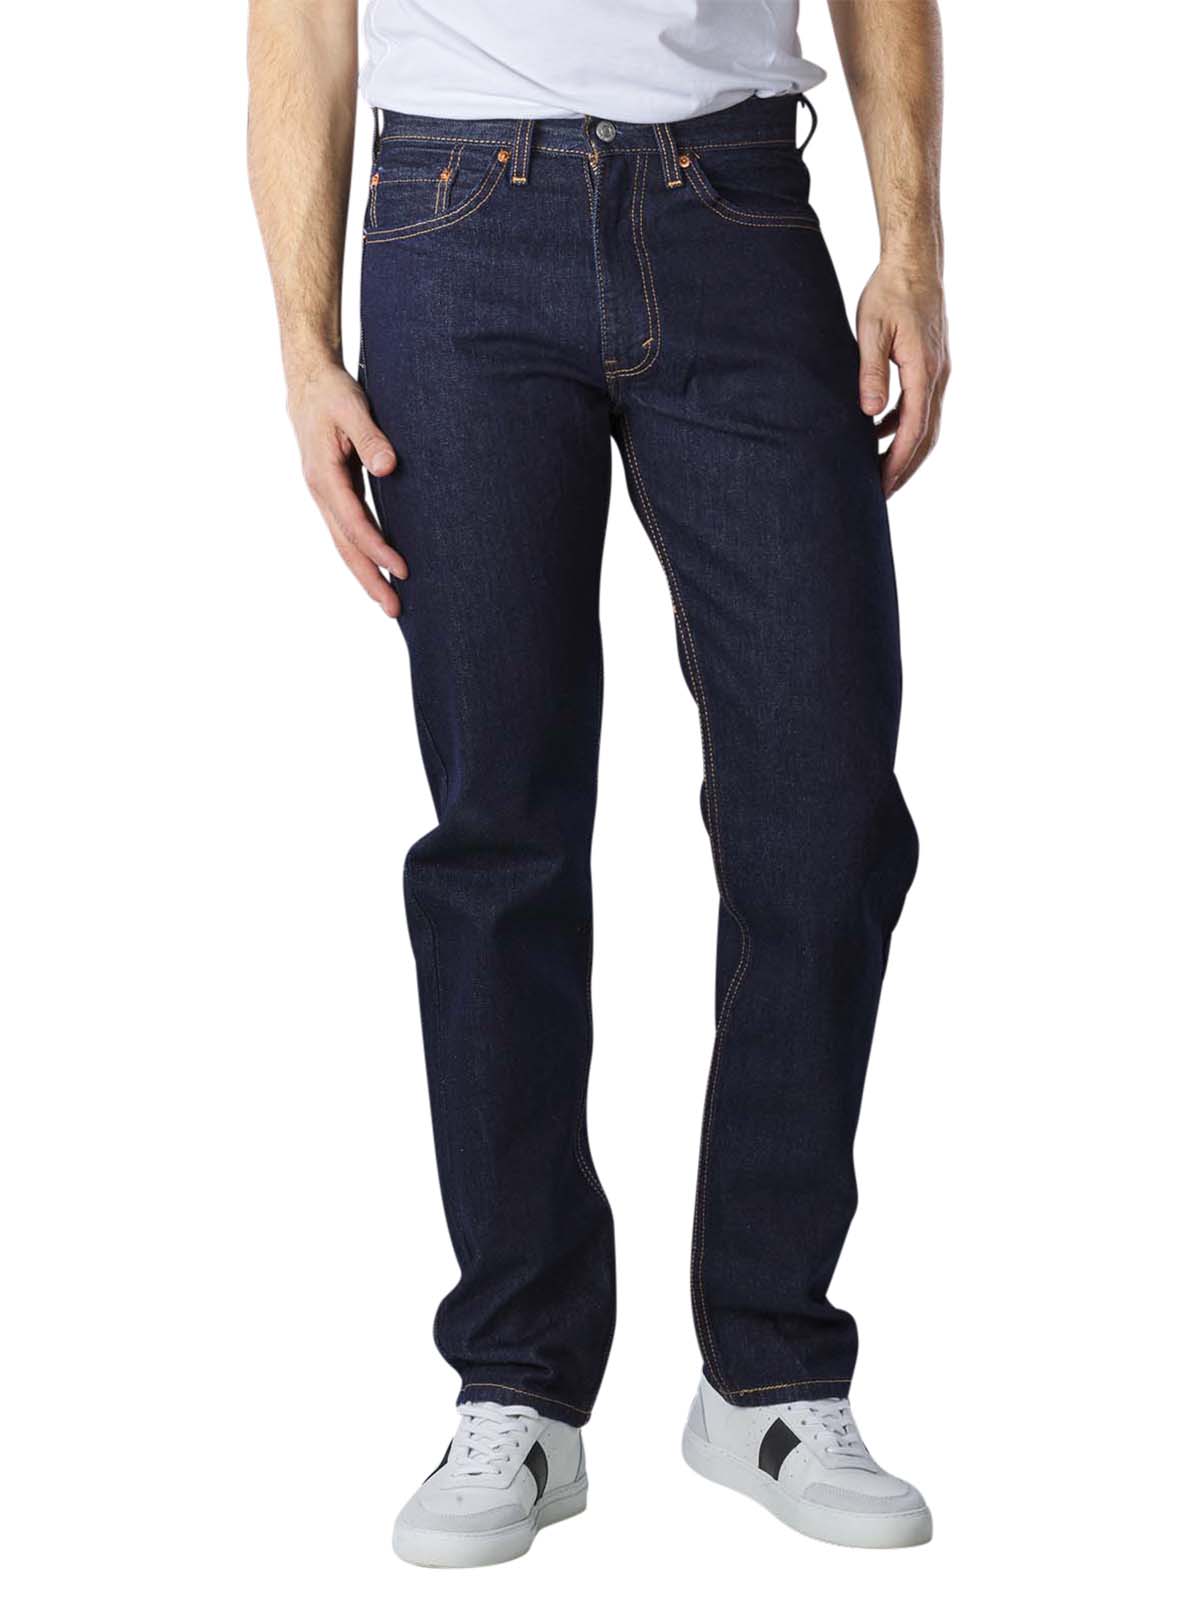 levi's 505 zip fly jeans